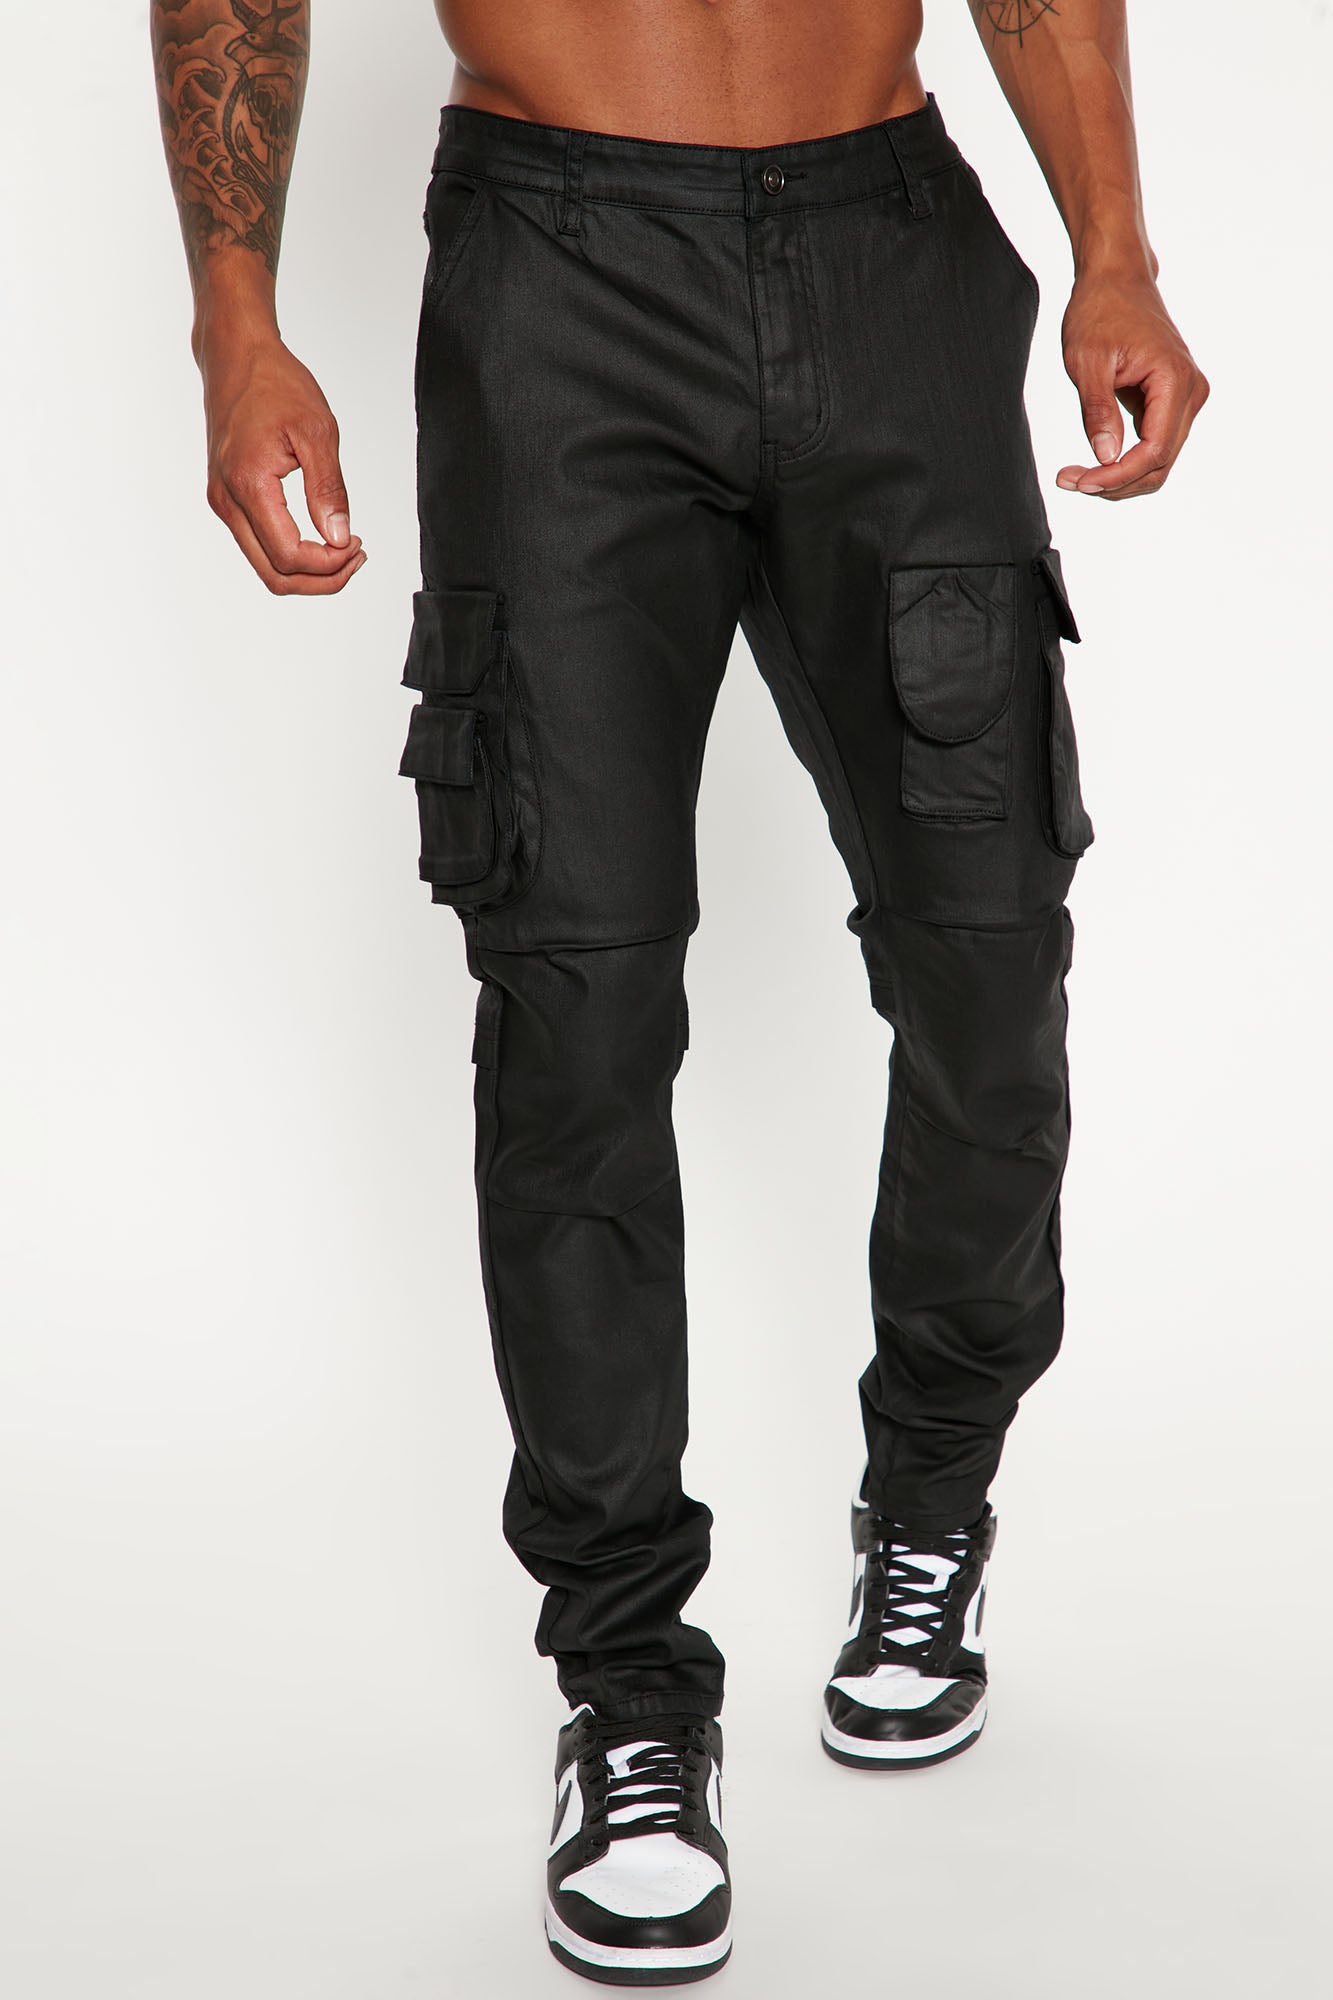 Fanxing Men's Tactical Pants Multi-Pockets Work Outdoor Military Cargo Pants  Fashion Casual Jeans Skinny Denim Jogger Pants S/M/L/XL/XXL/XXXL -  Walmart.com